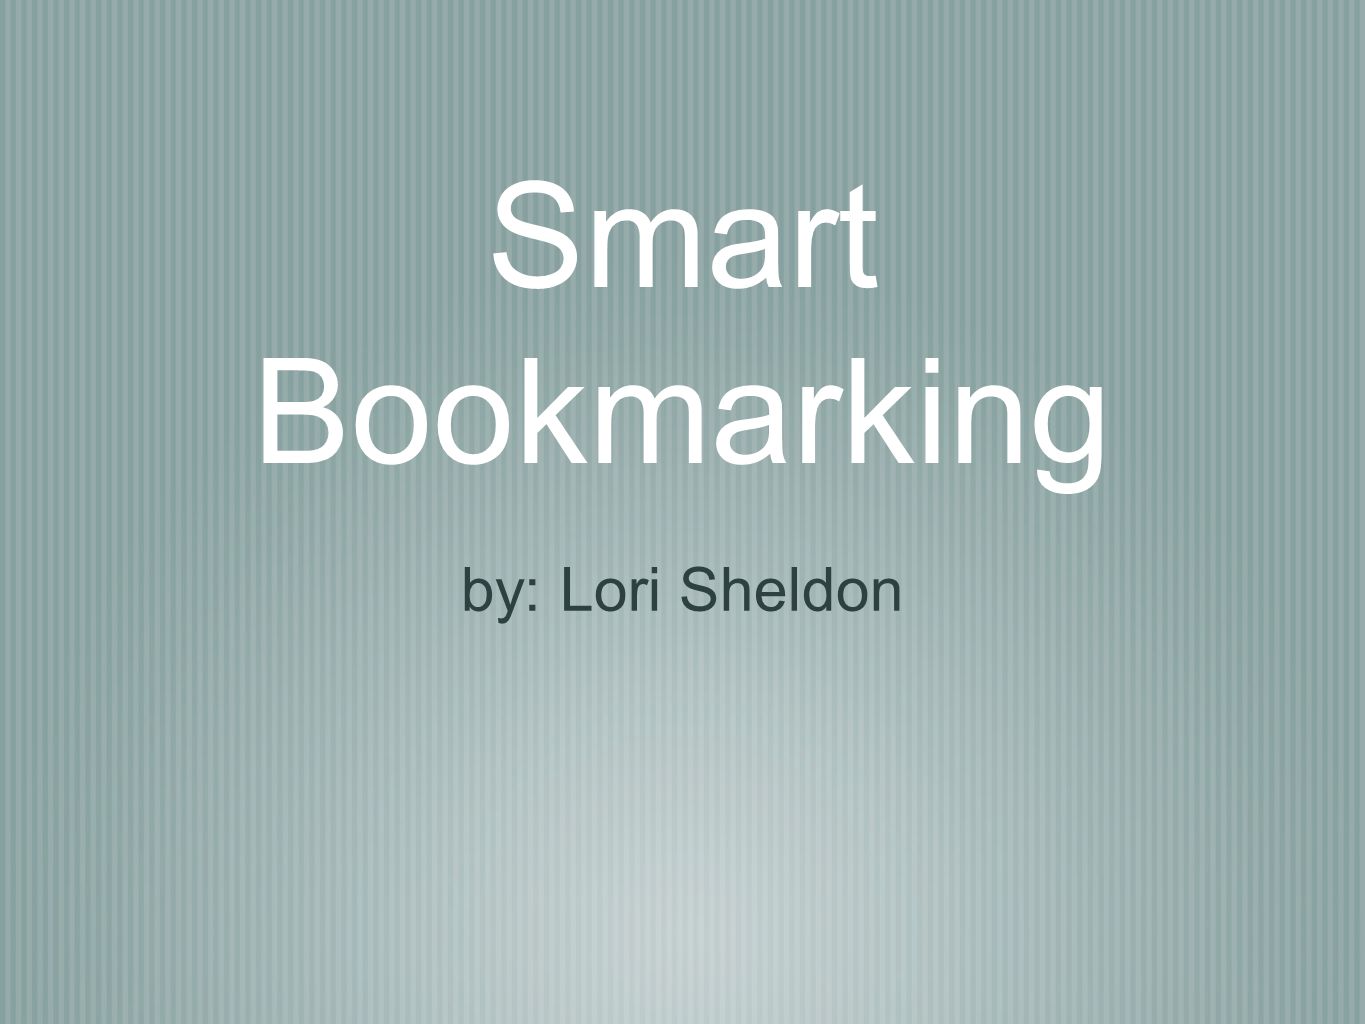 Smart Bookmarking by: Lori Sheldon